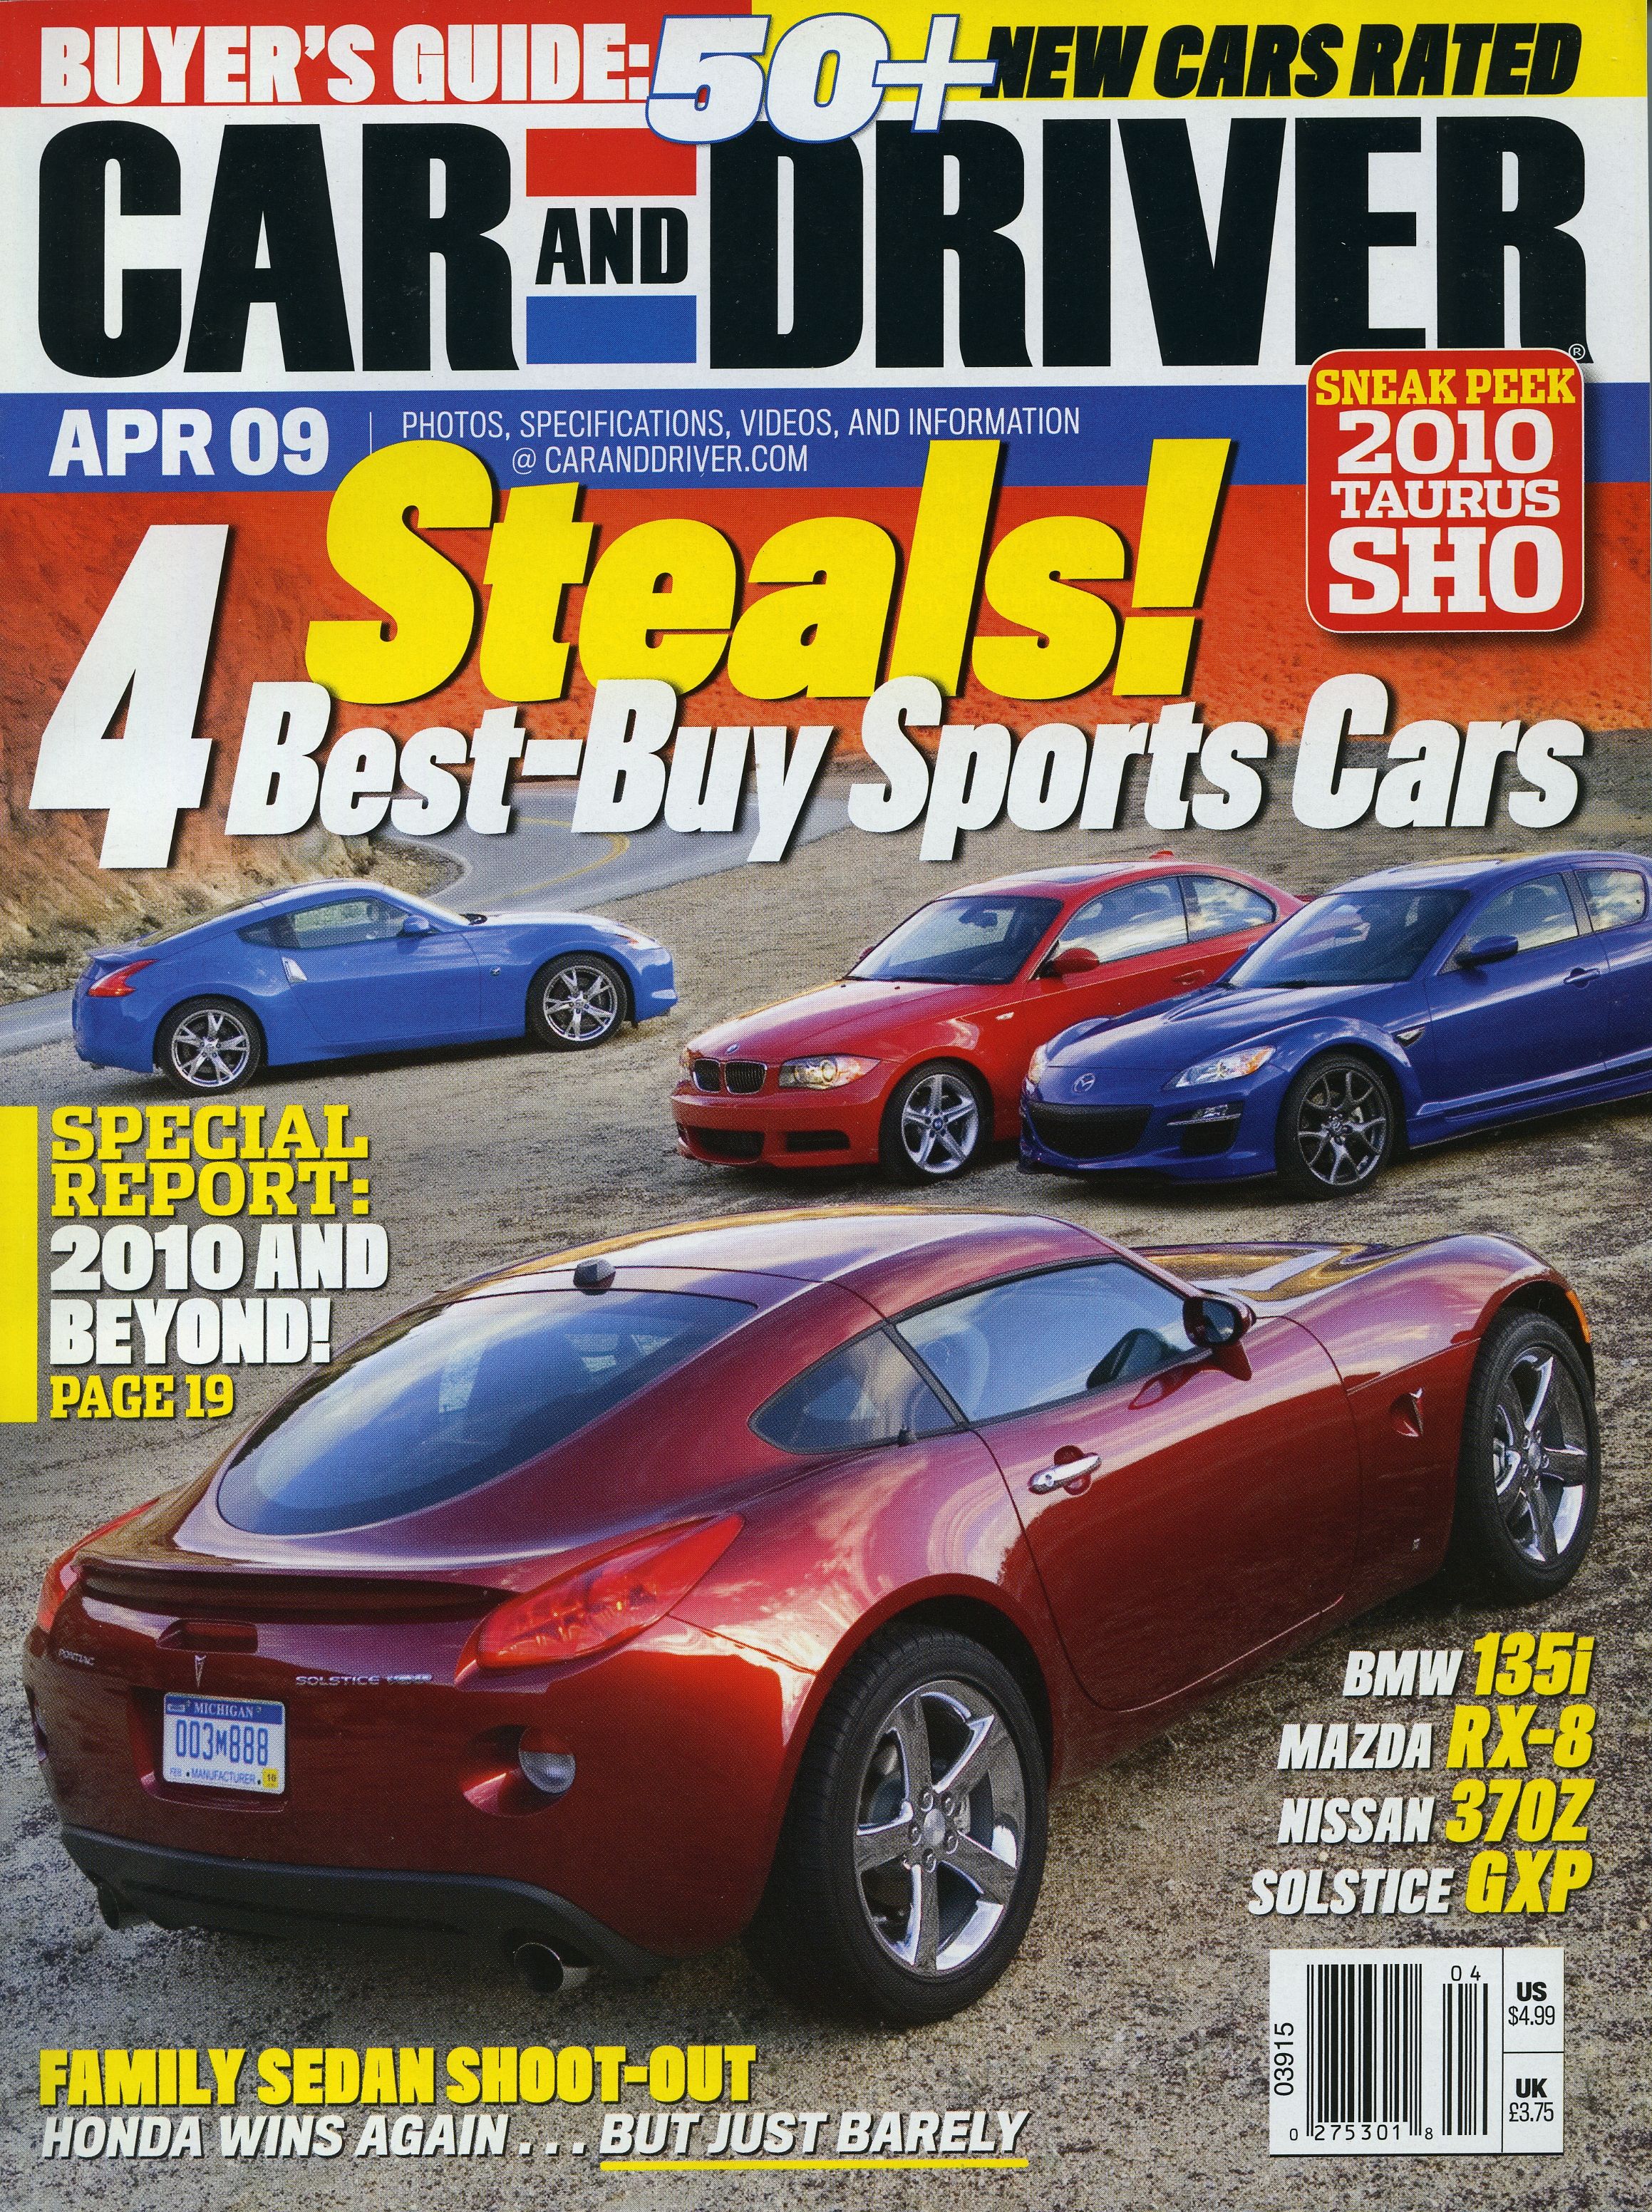 Car magazine. Car and Driver журнал. Car Magazine Cover. Car and Drive Magazine. Car and Driver Magazine Pages.